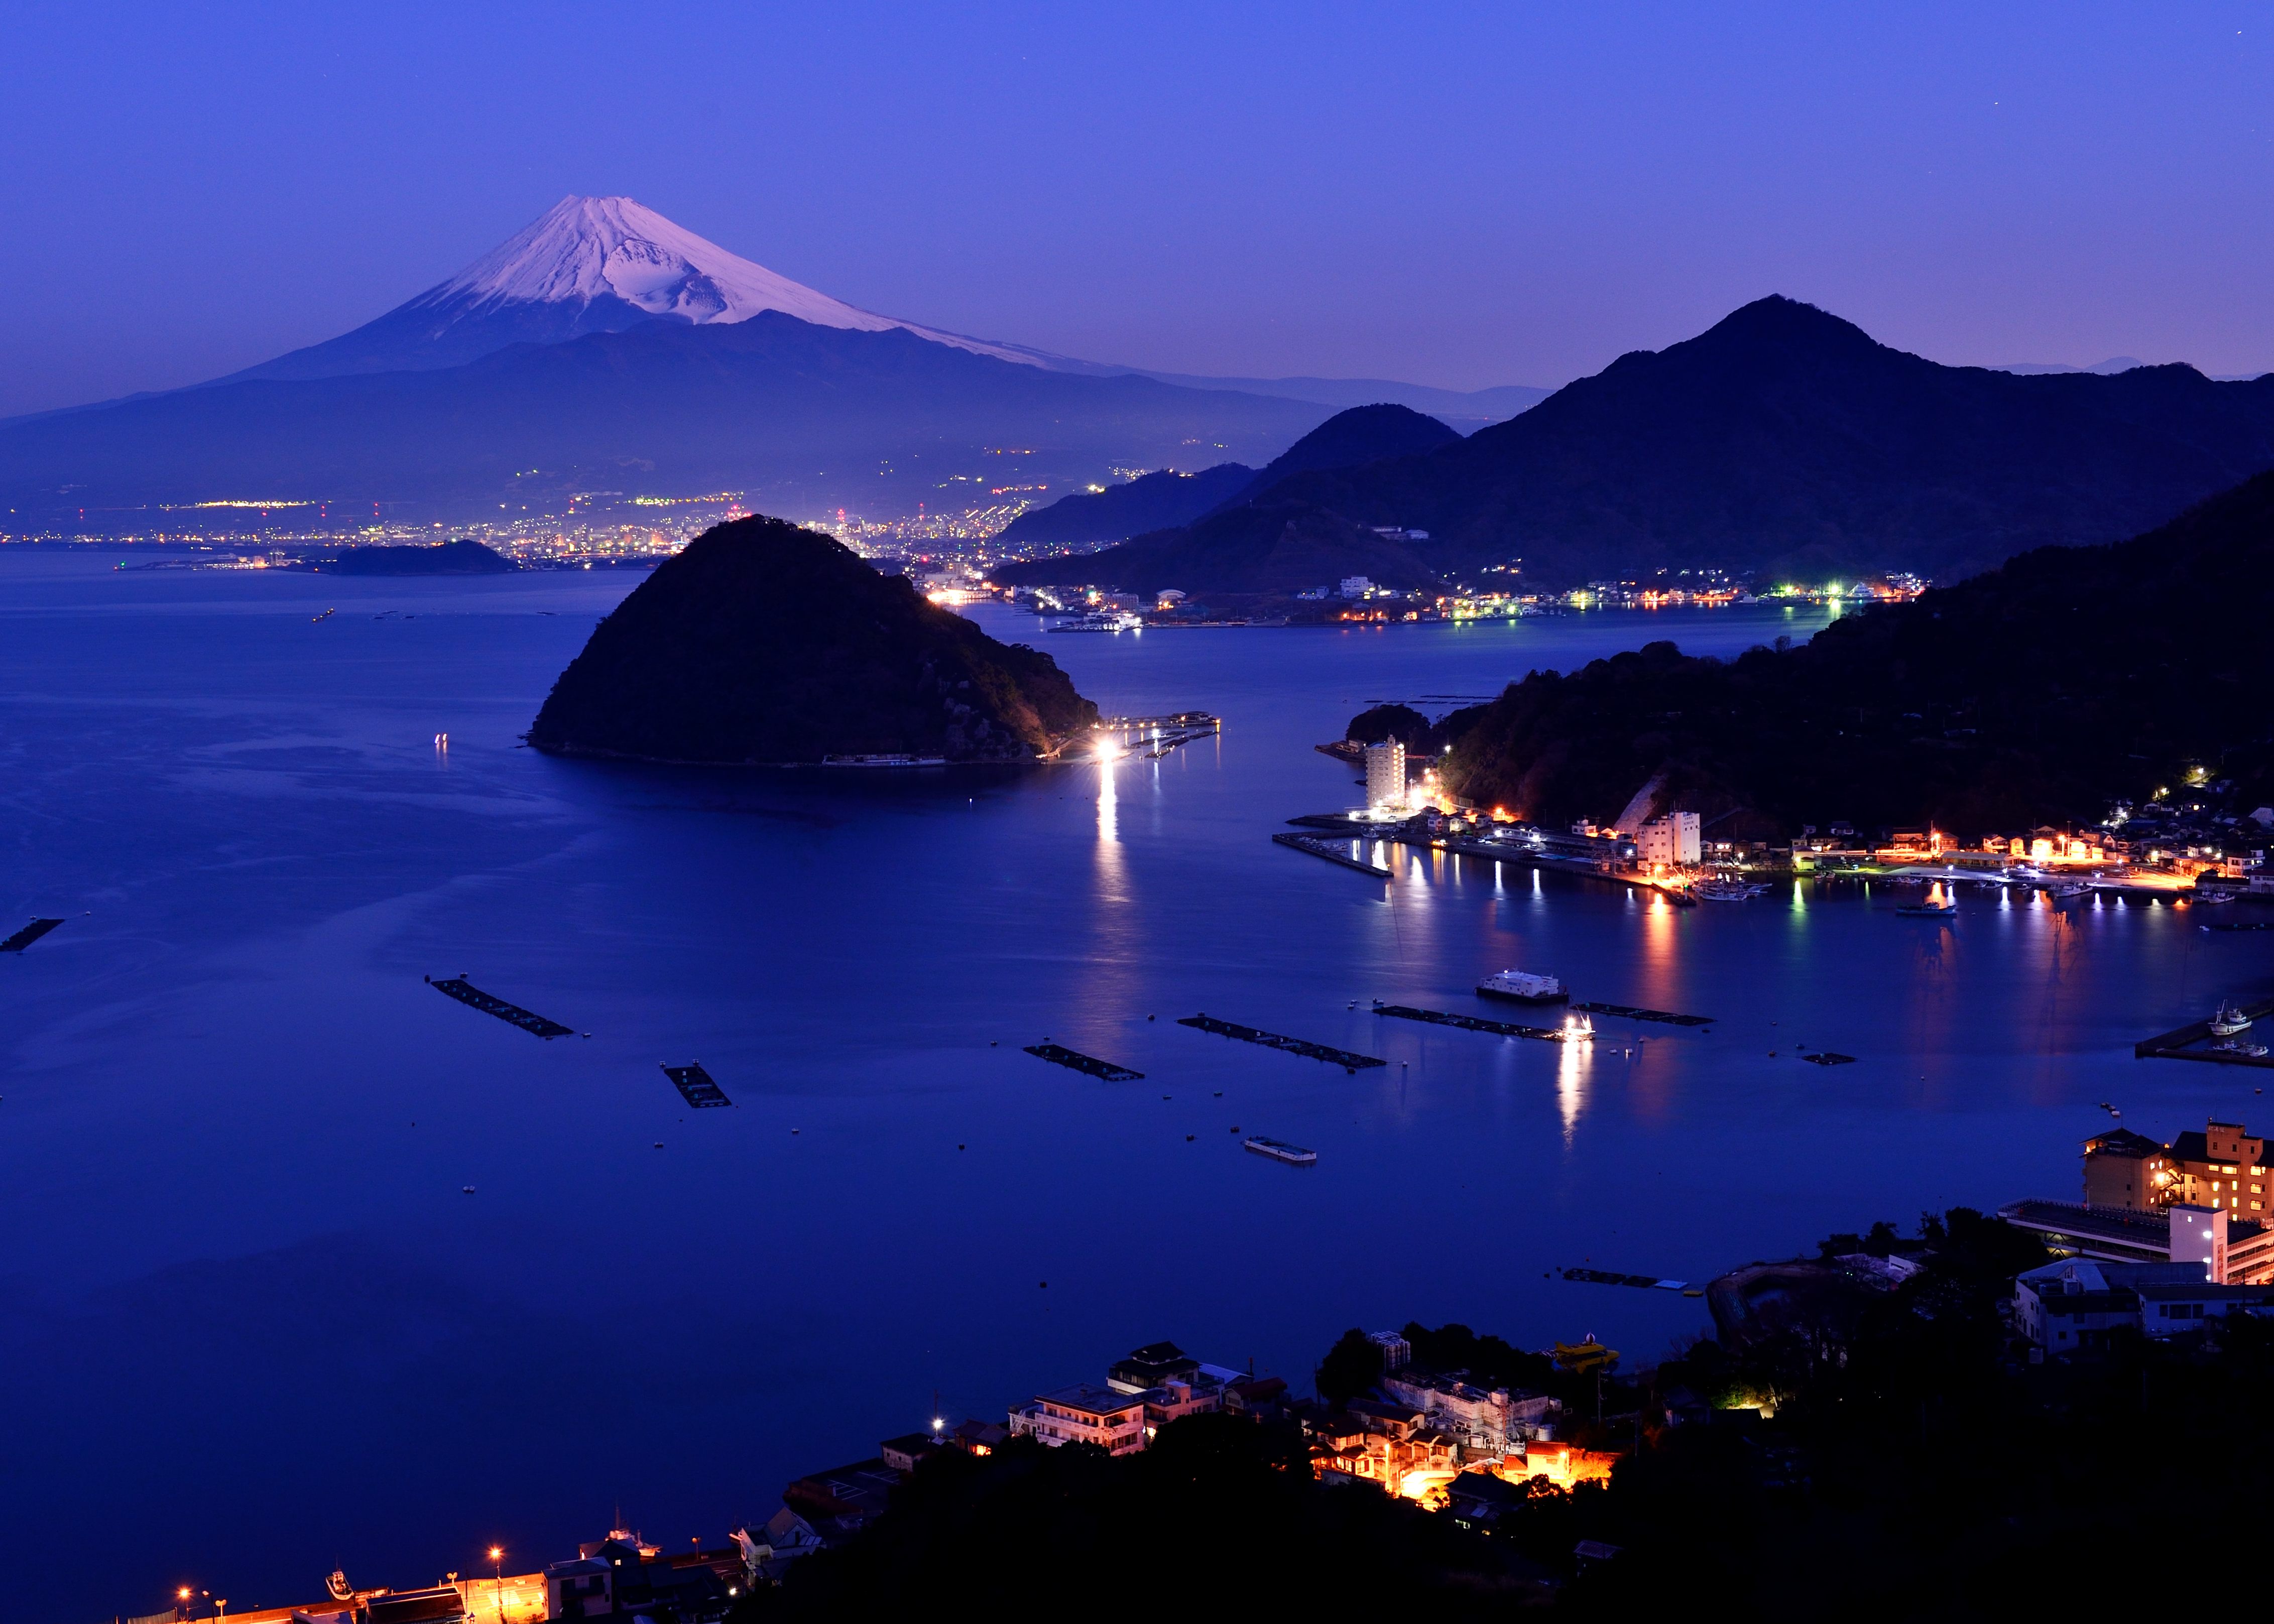 354244 Bild herunterladen erde/natur, fujisan, japan, landschaft, nacht, vulkan, vulkane - Hintergrundbilder und Bildschirmschoner kostenlos